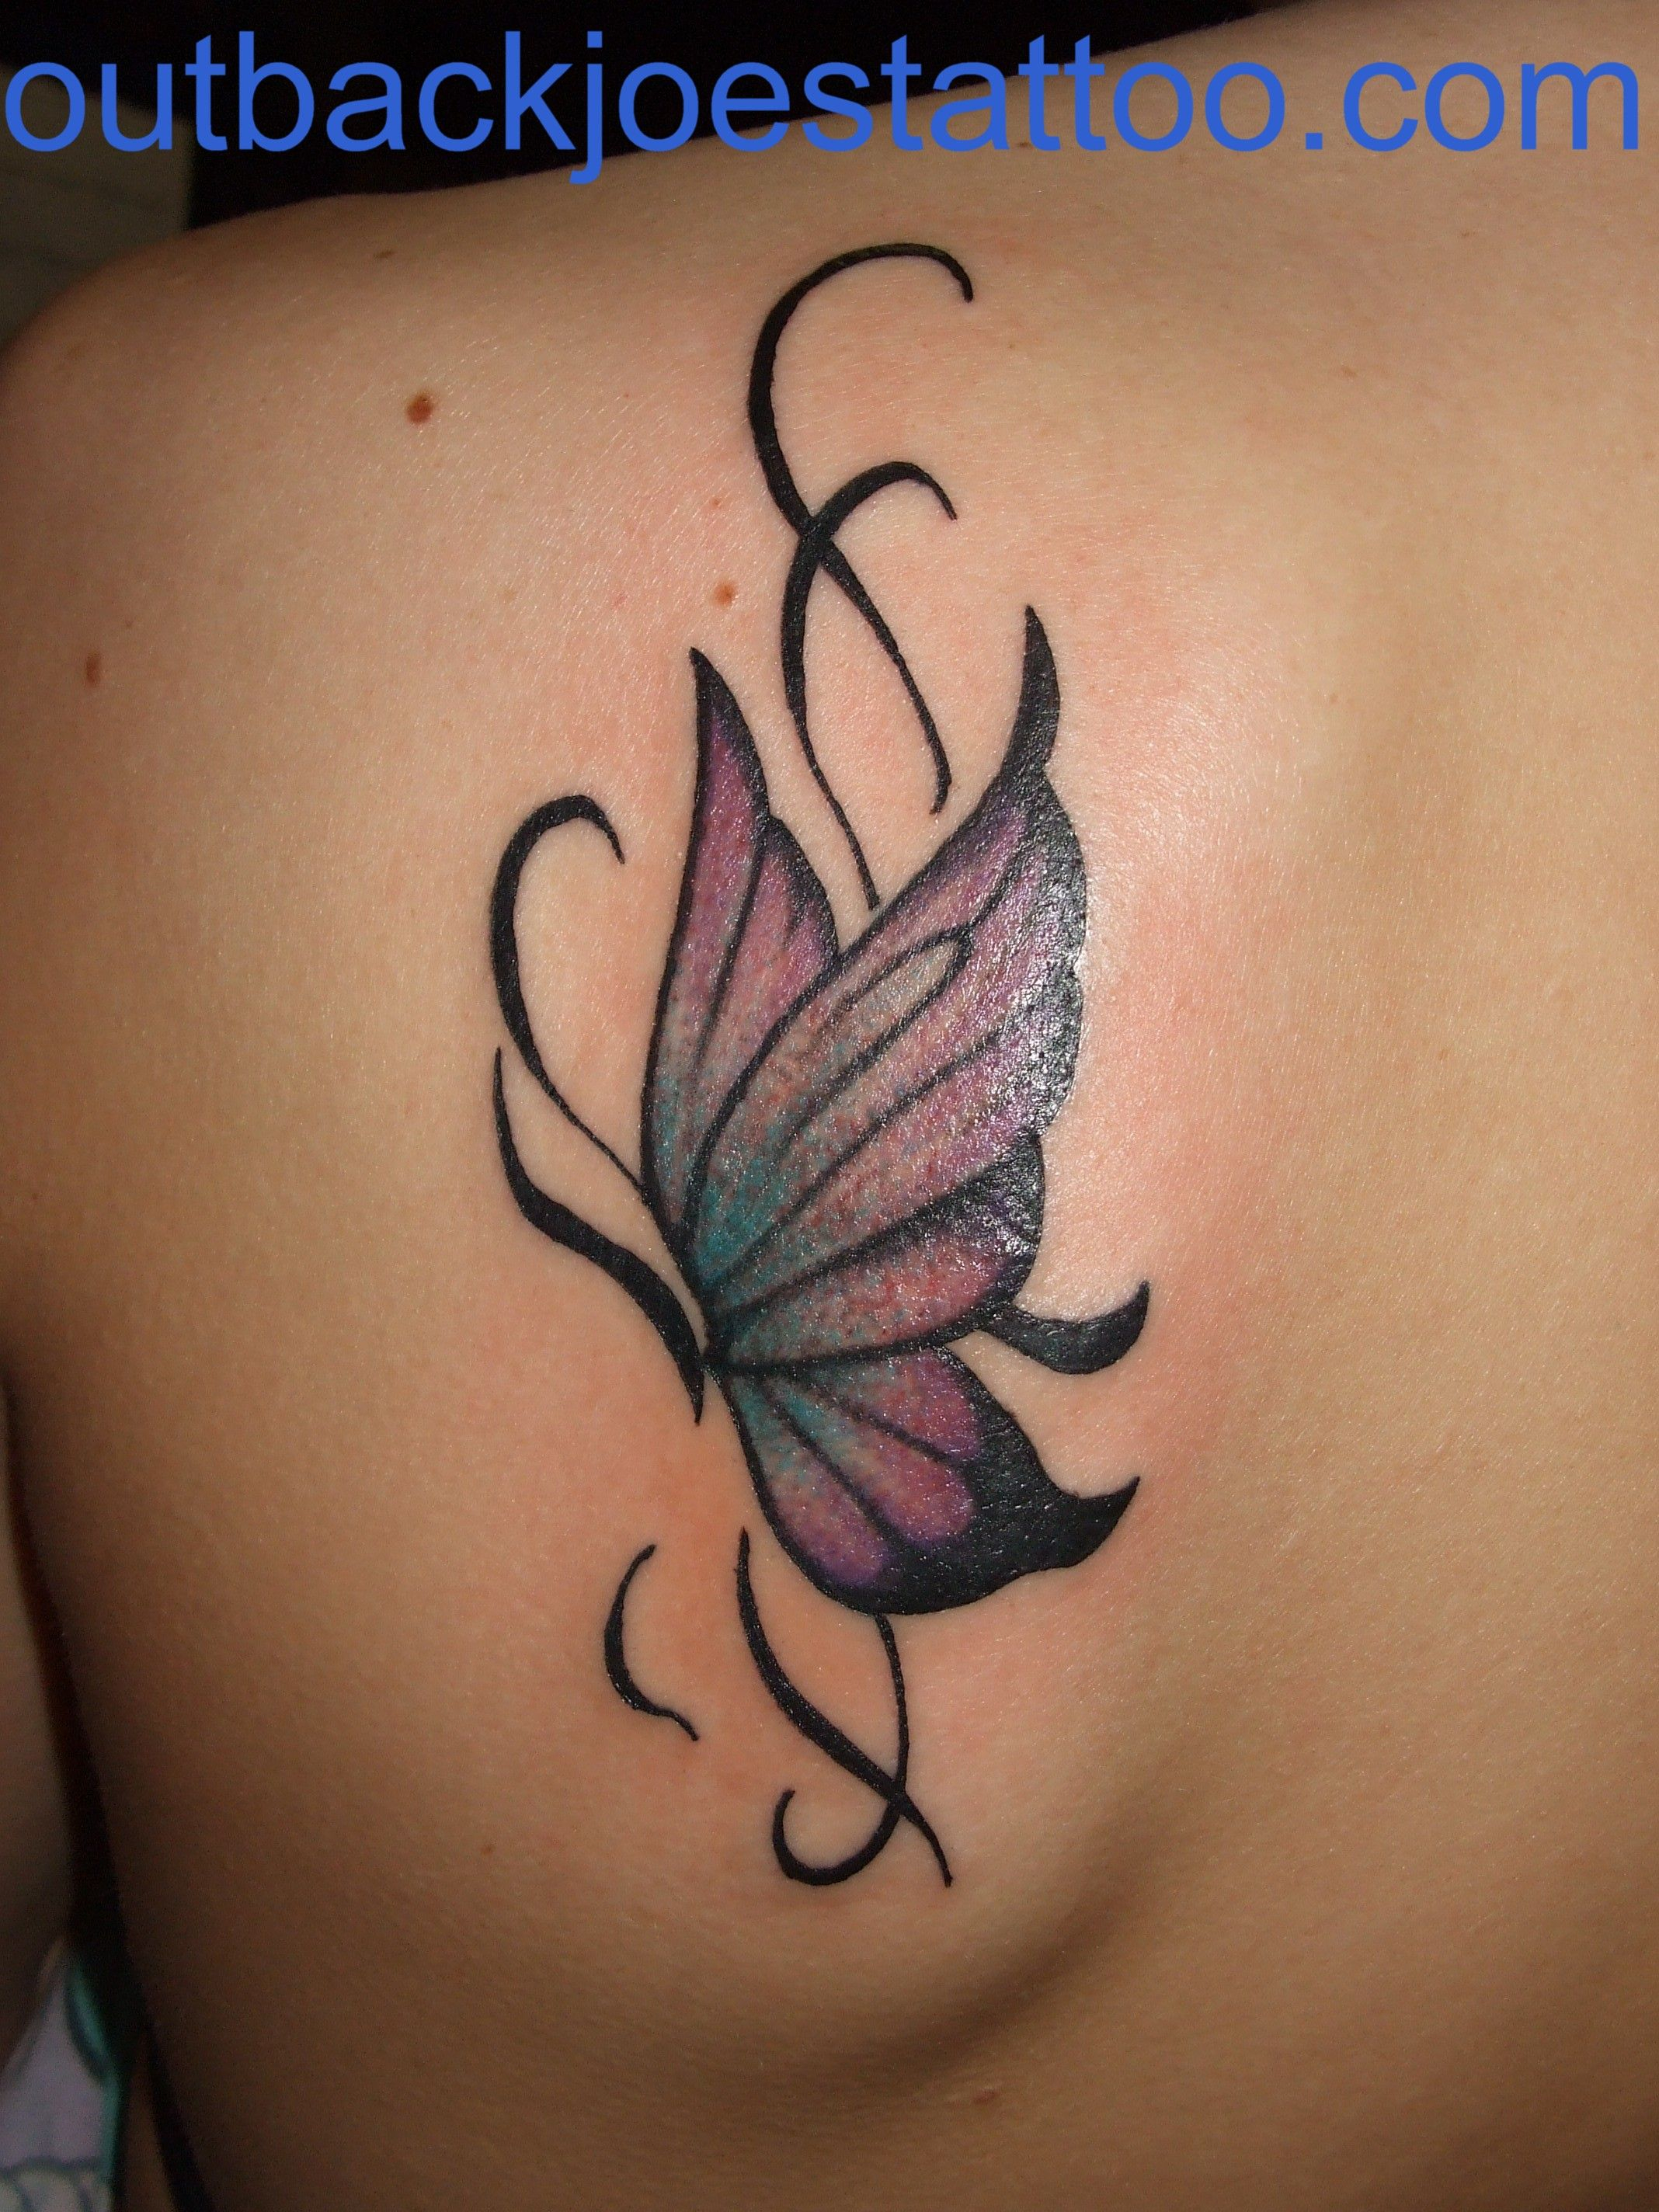 Butterflies Tattoos On Shoulder Tribal Butterfly Tattoo On Shoulder regarding dimensions 2136 X 2848